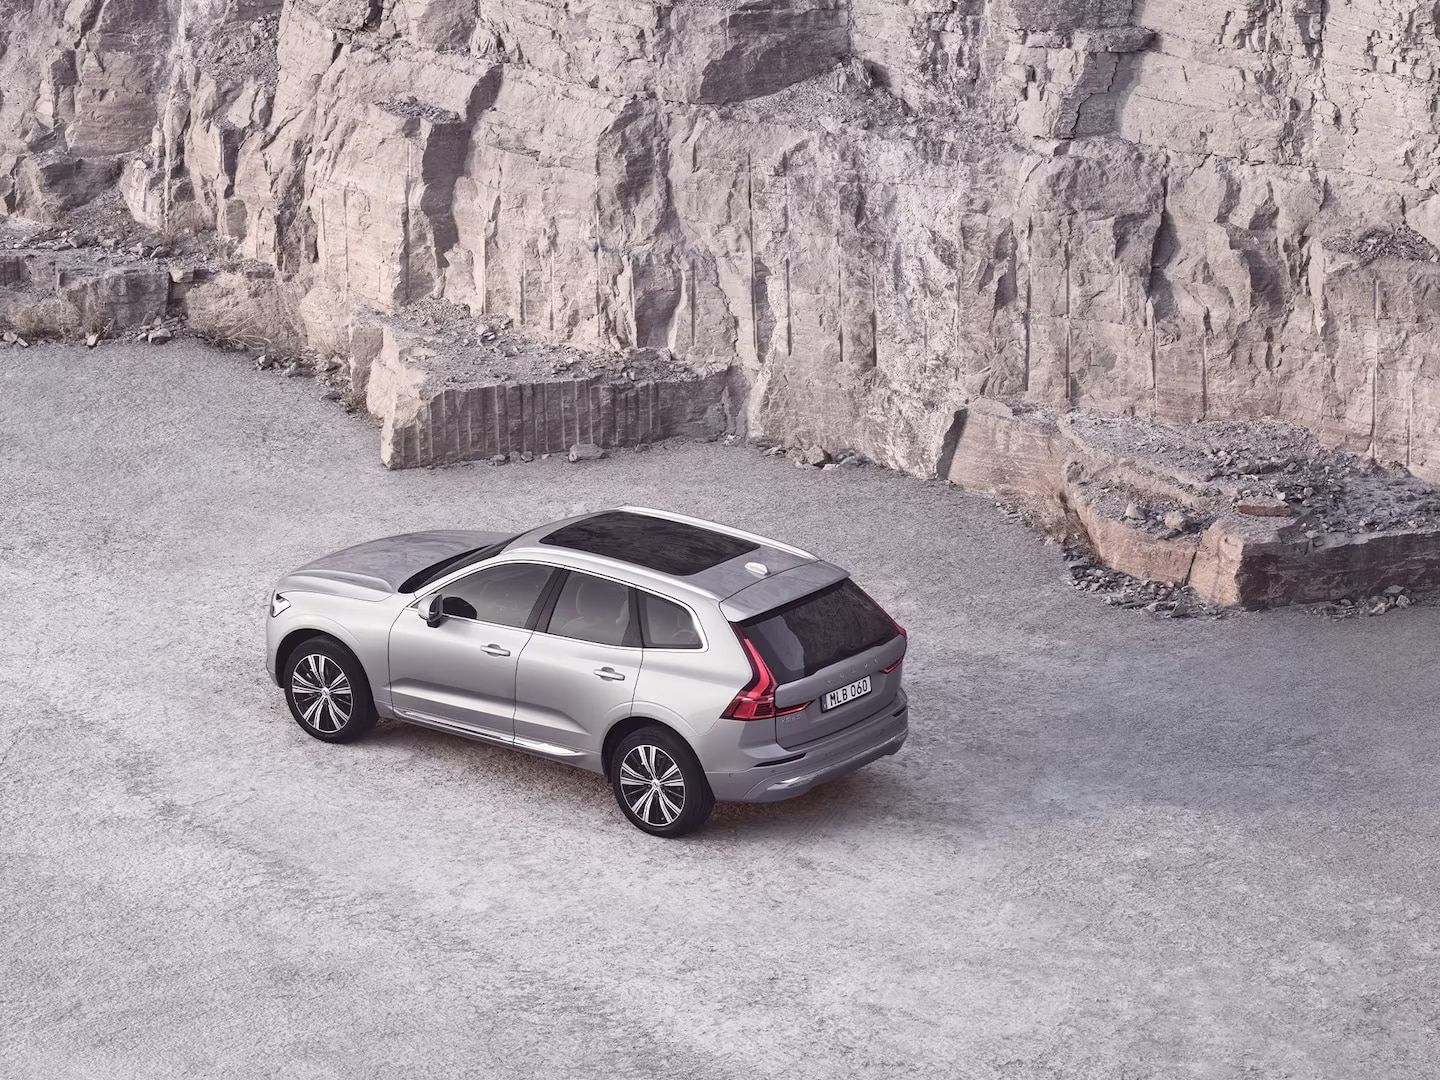 Volvo XC60 s panoramatickou střechou u kamenné zdi.